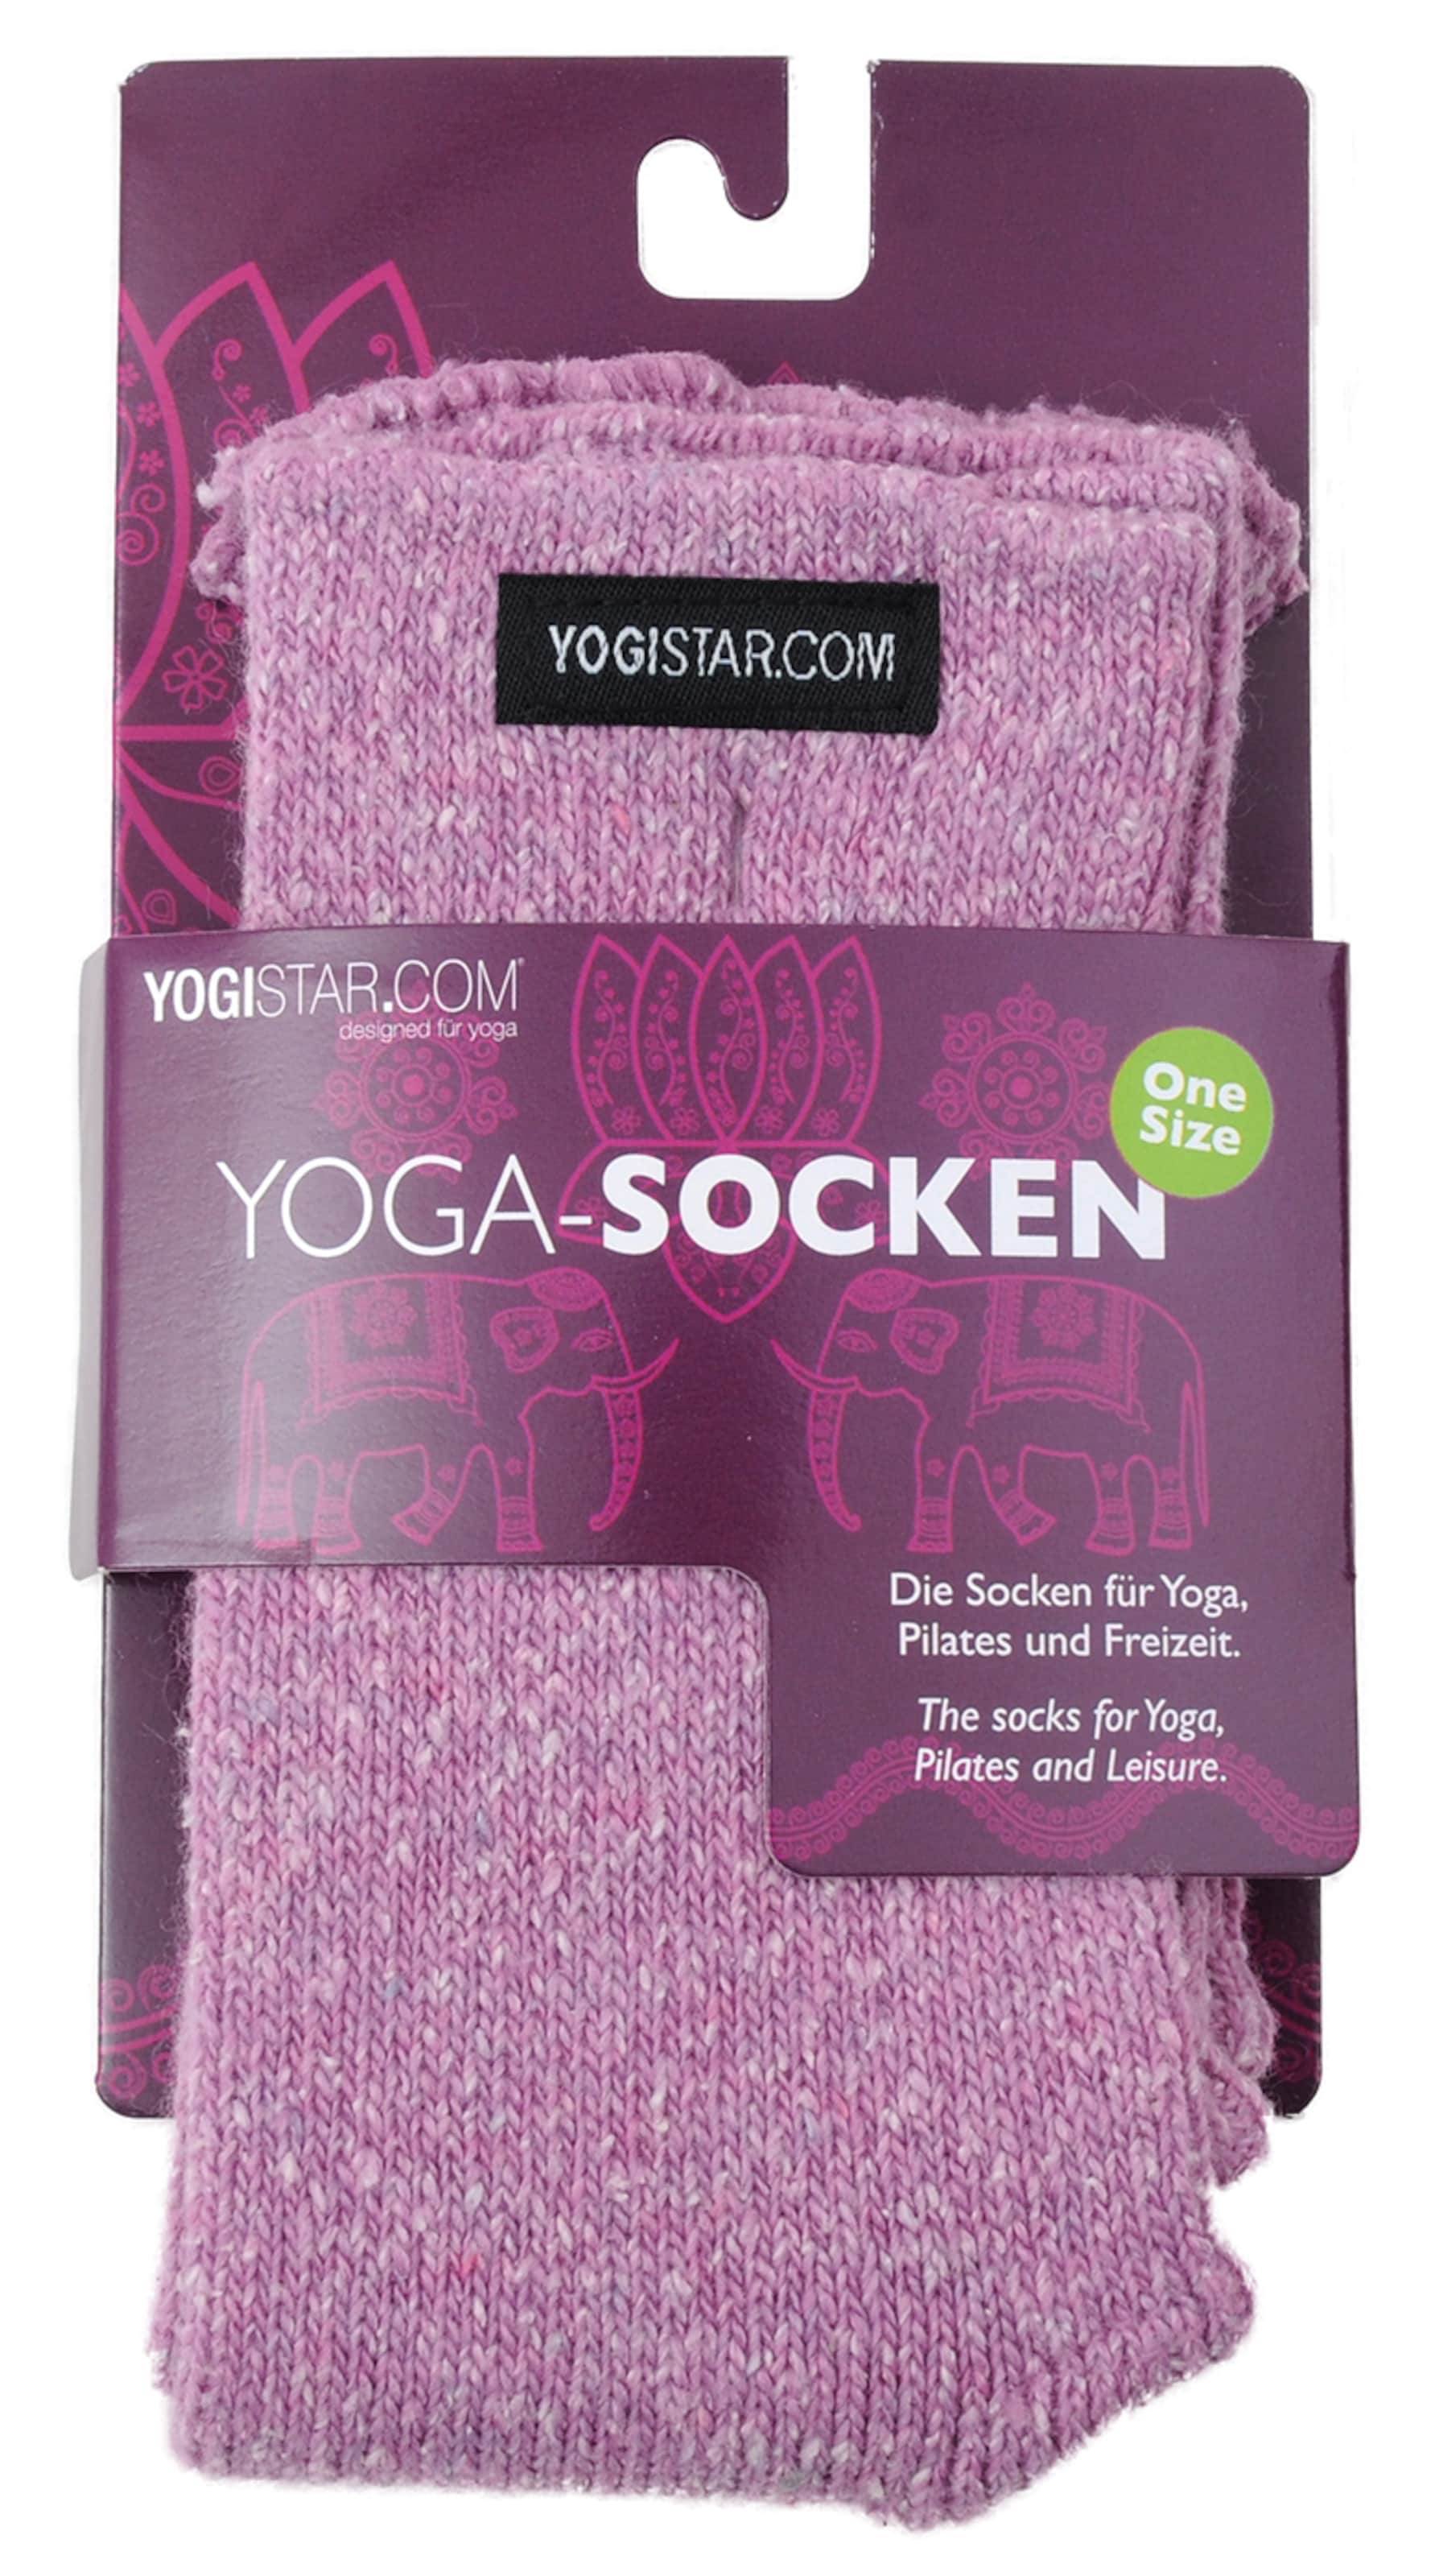 YOGISTAR.COM Yoga-socken in Pink 